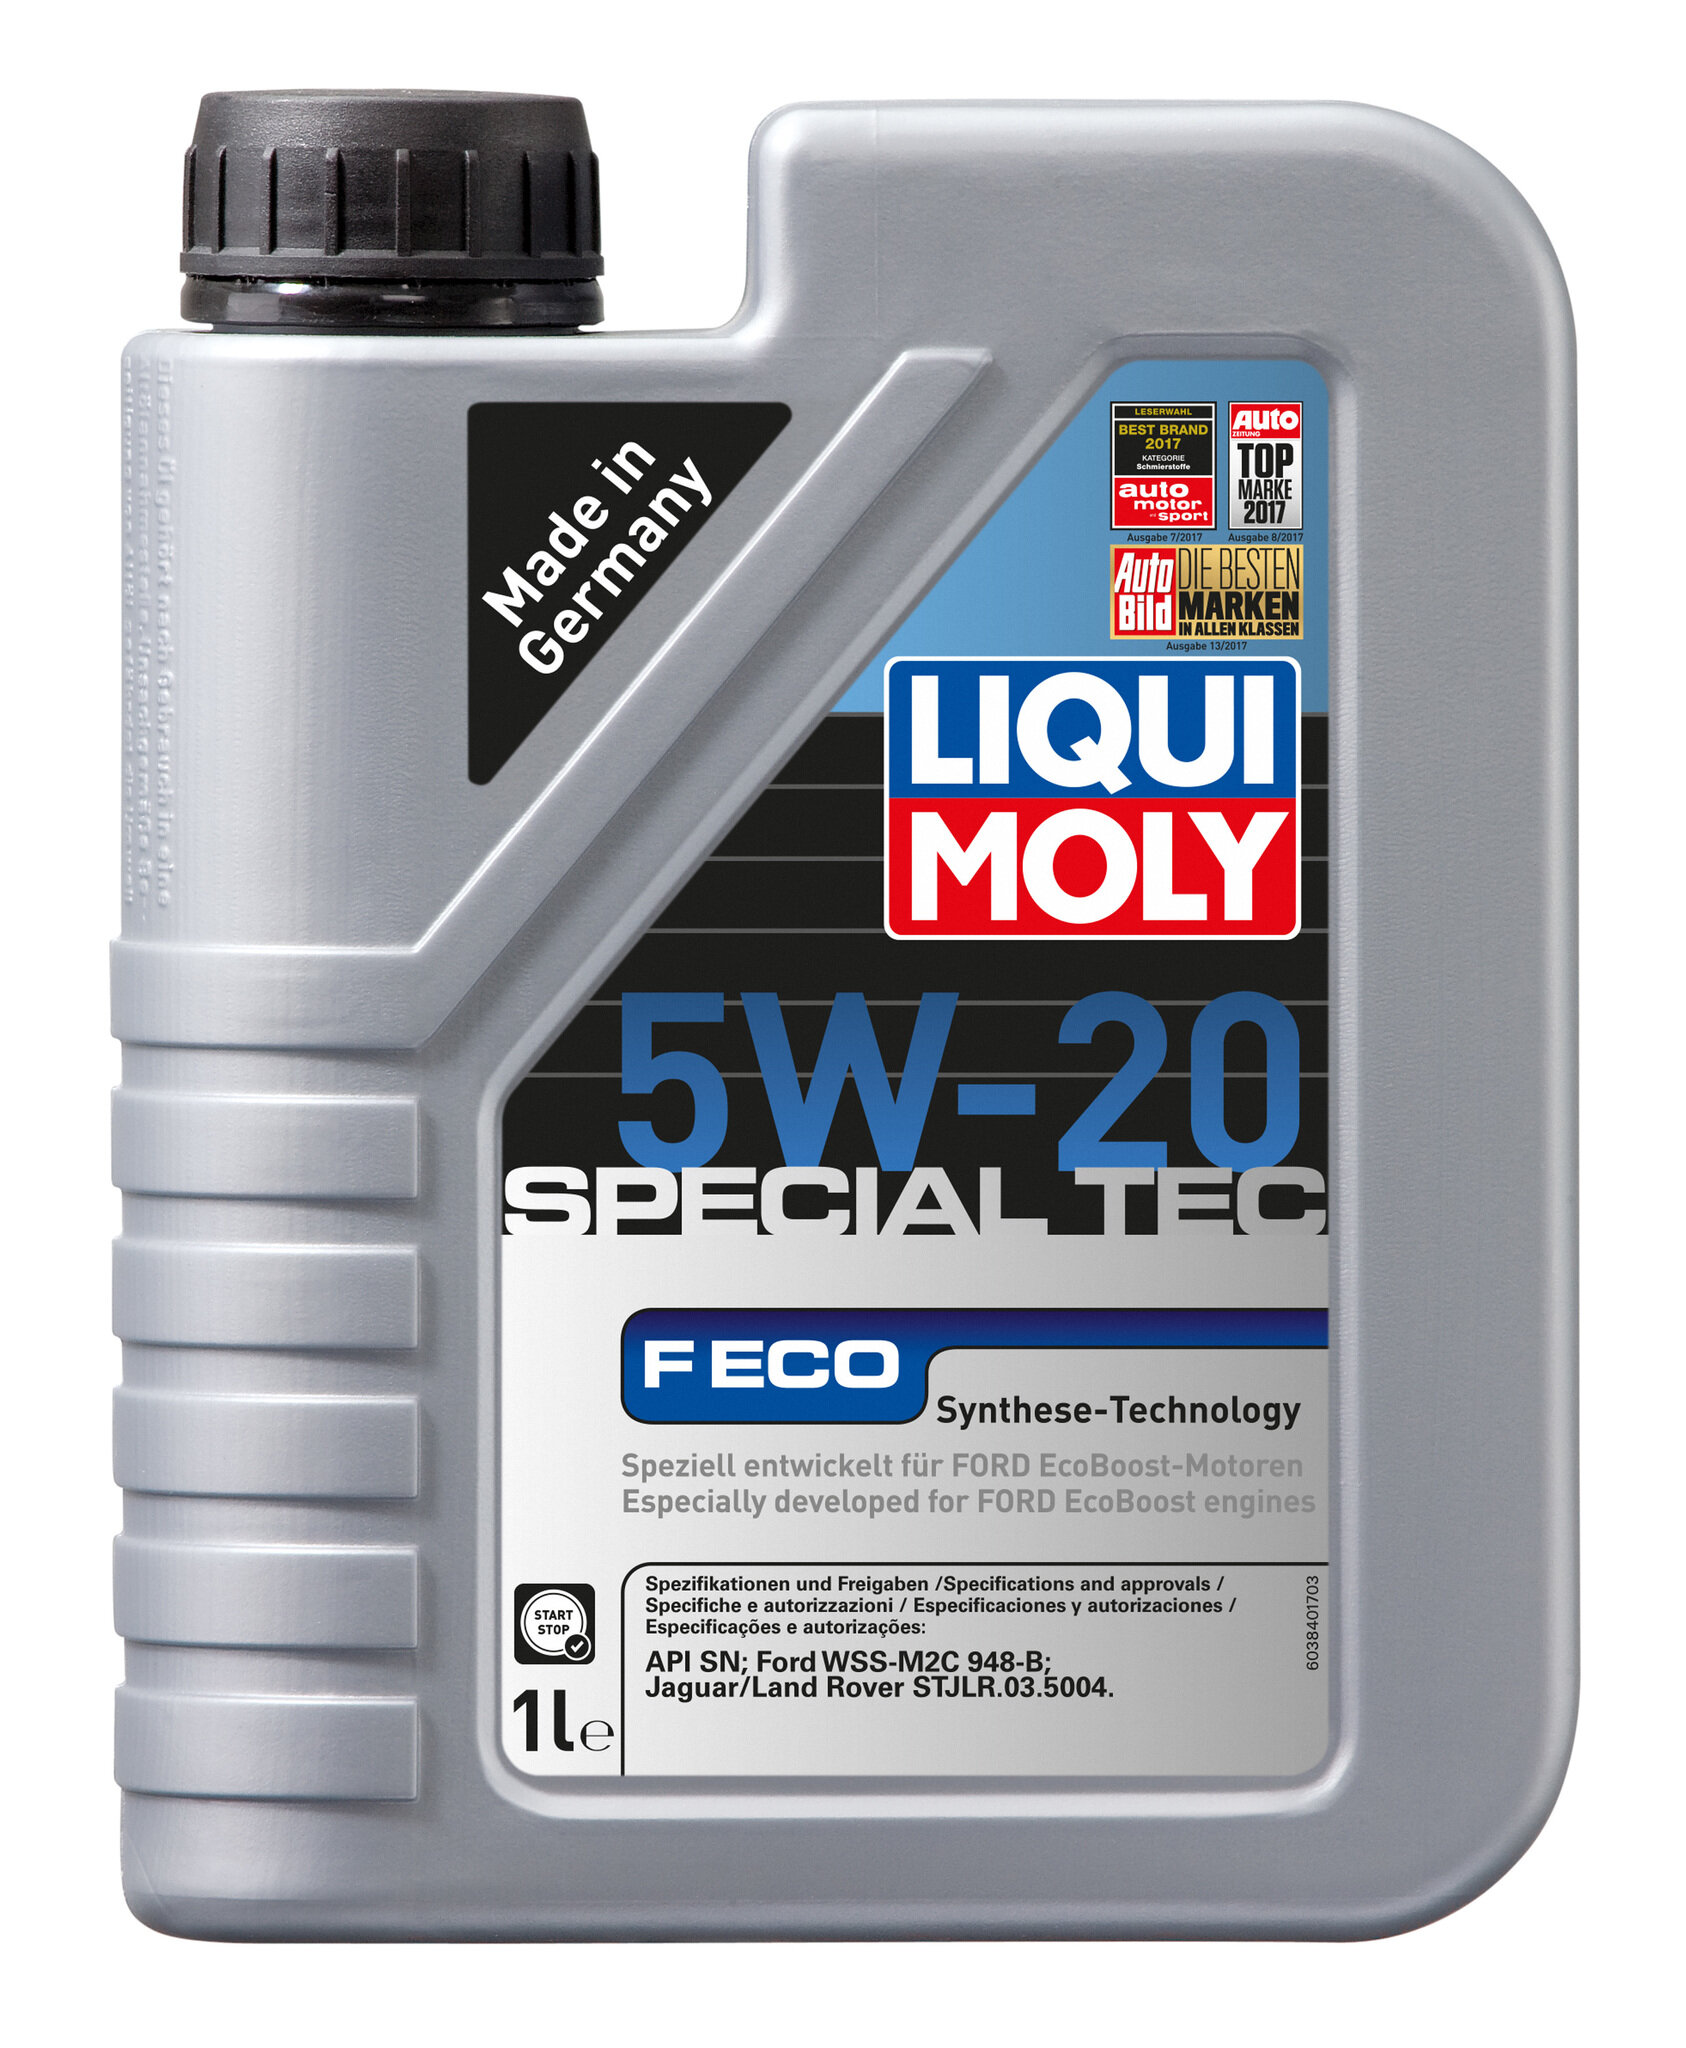 Полусинтетическое моторное масло LIQUI MOLY Special Tec F ECO 5W-20